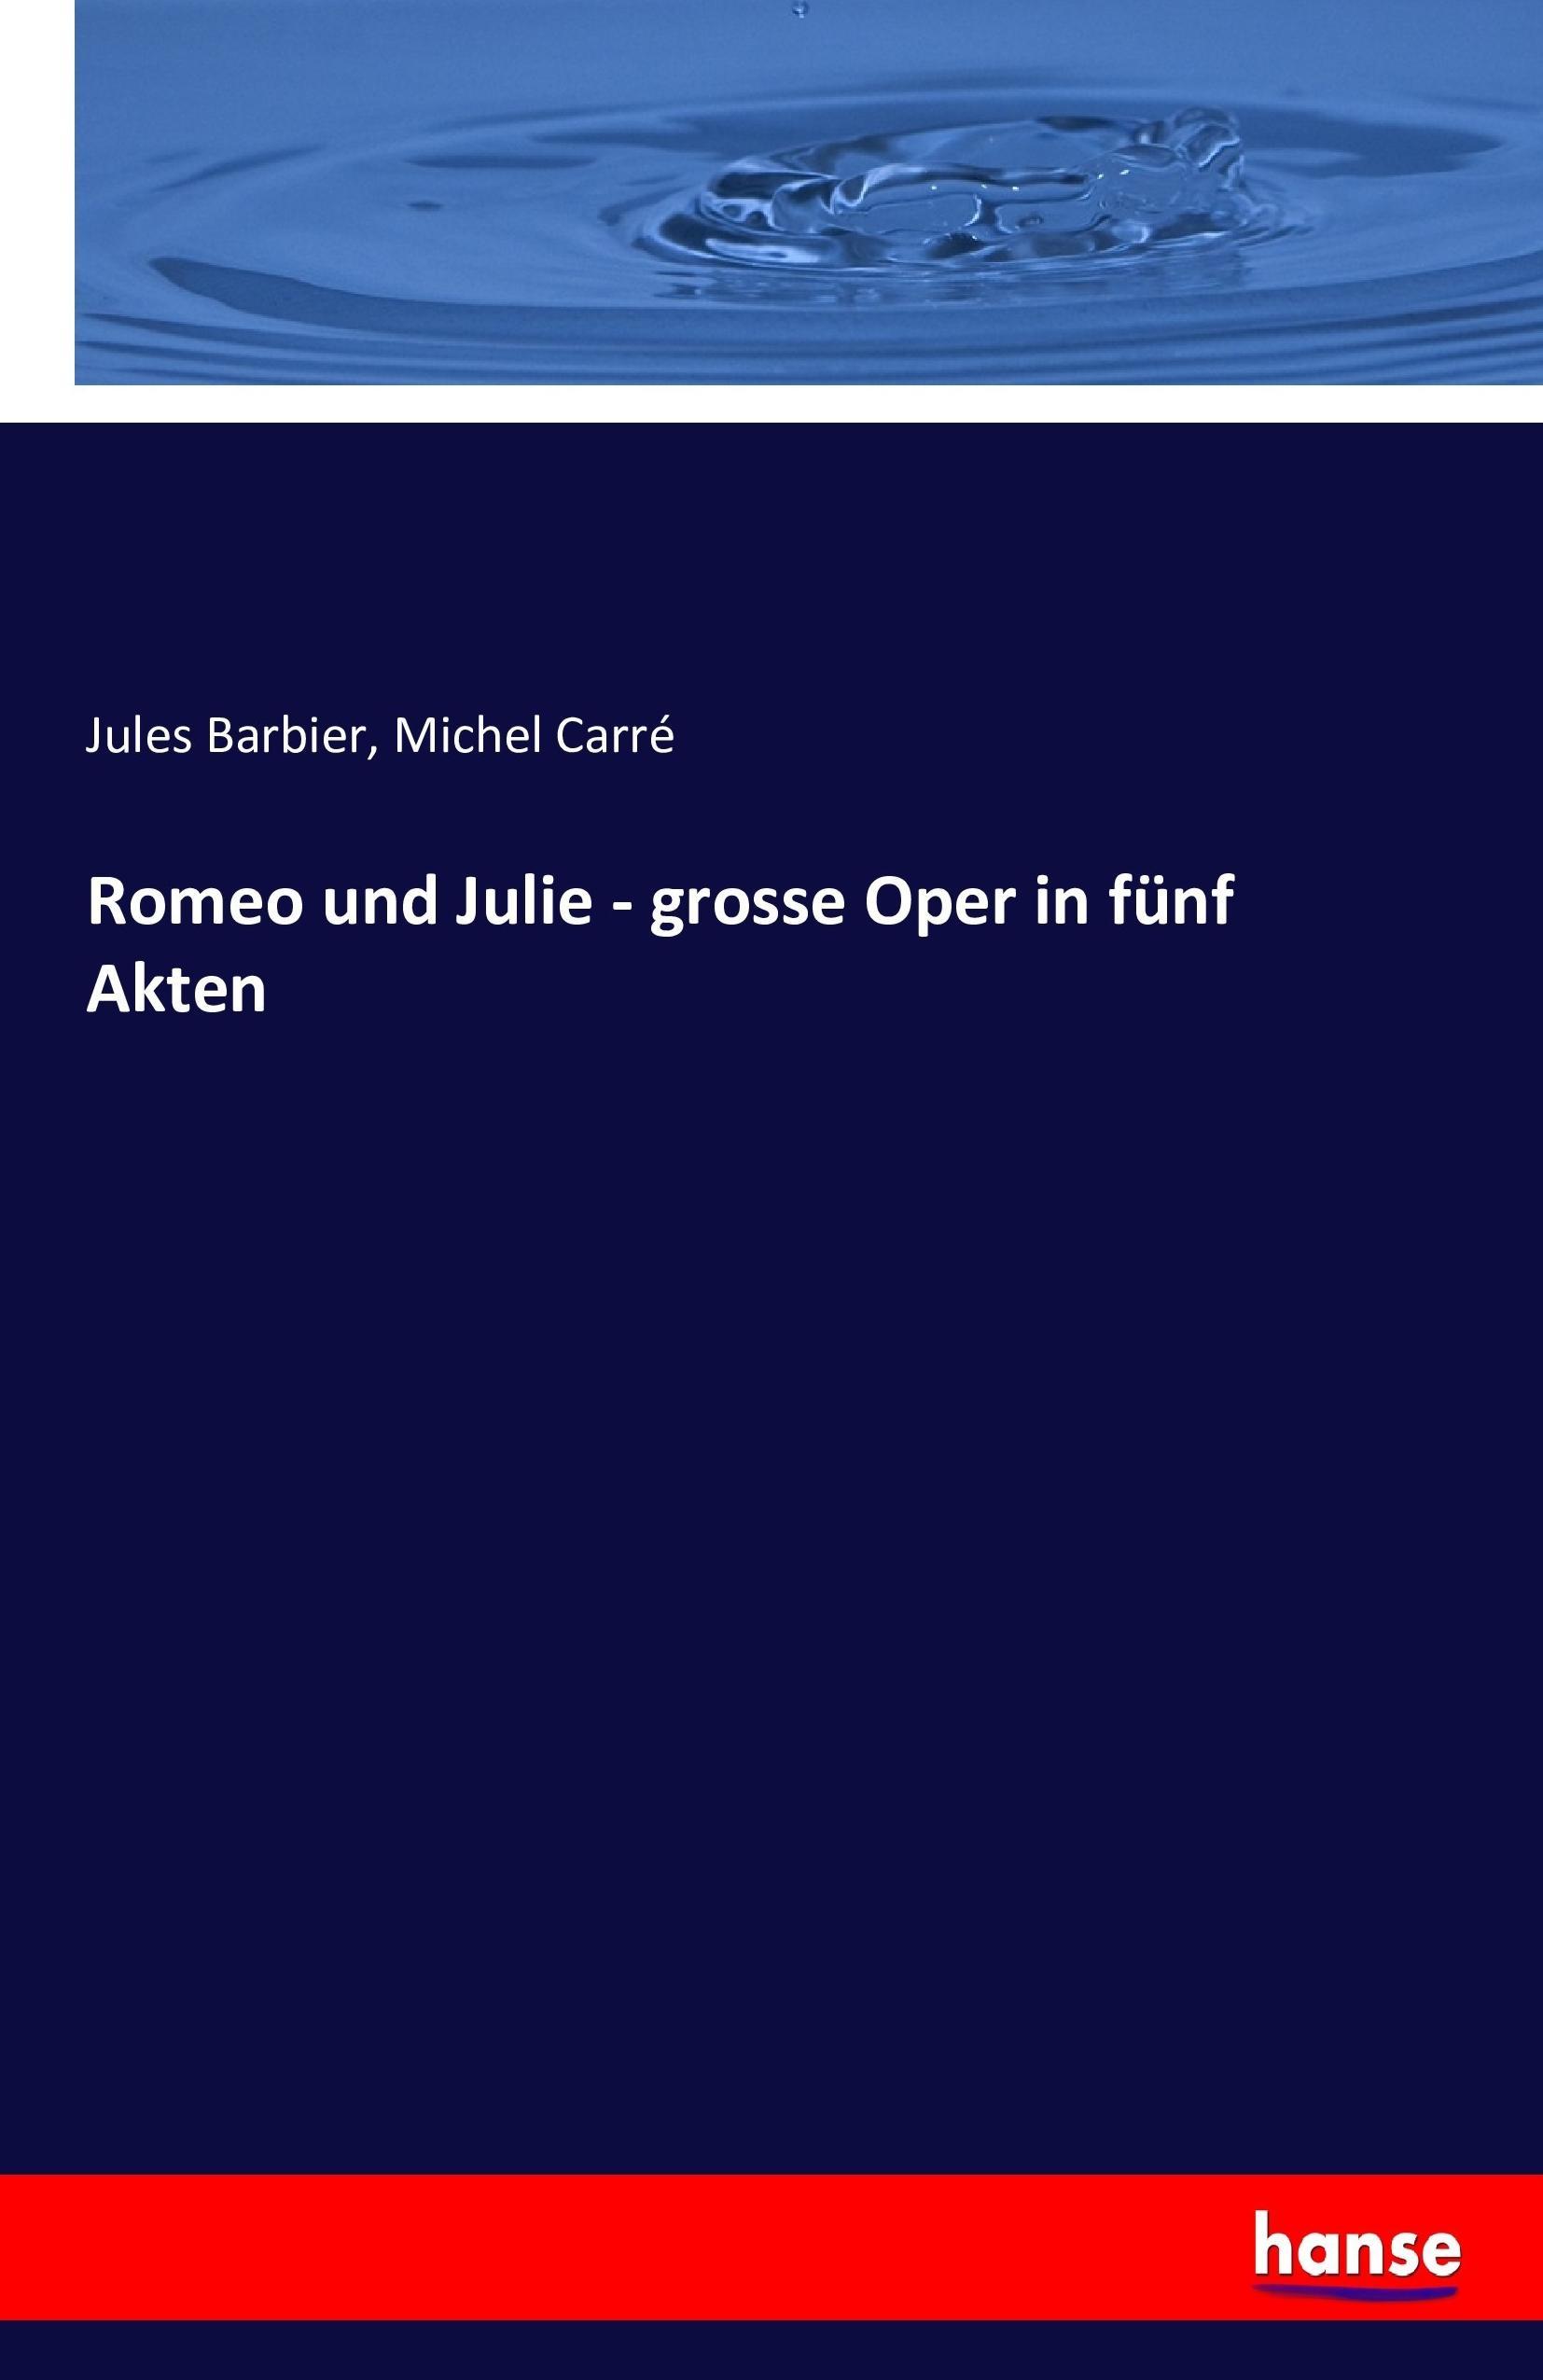 Romeo und Julie - grosse Oper in fuenf Akten - Barbier, Jules Carré, Michel